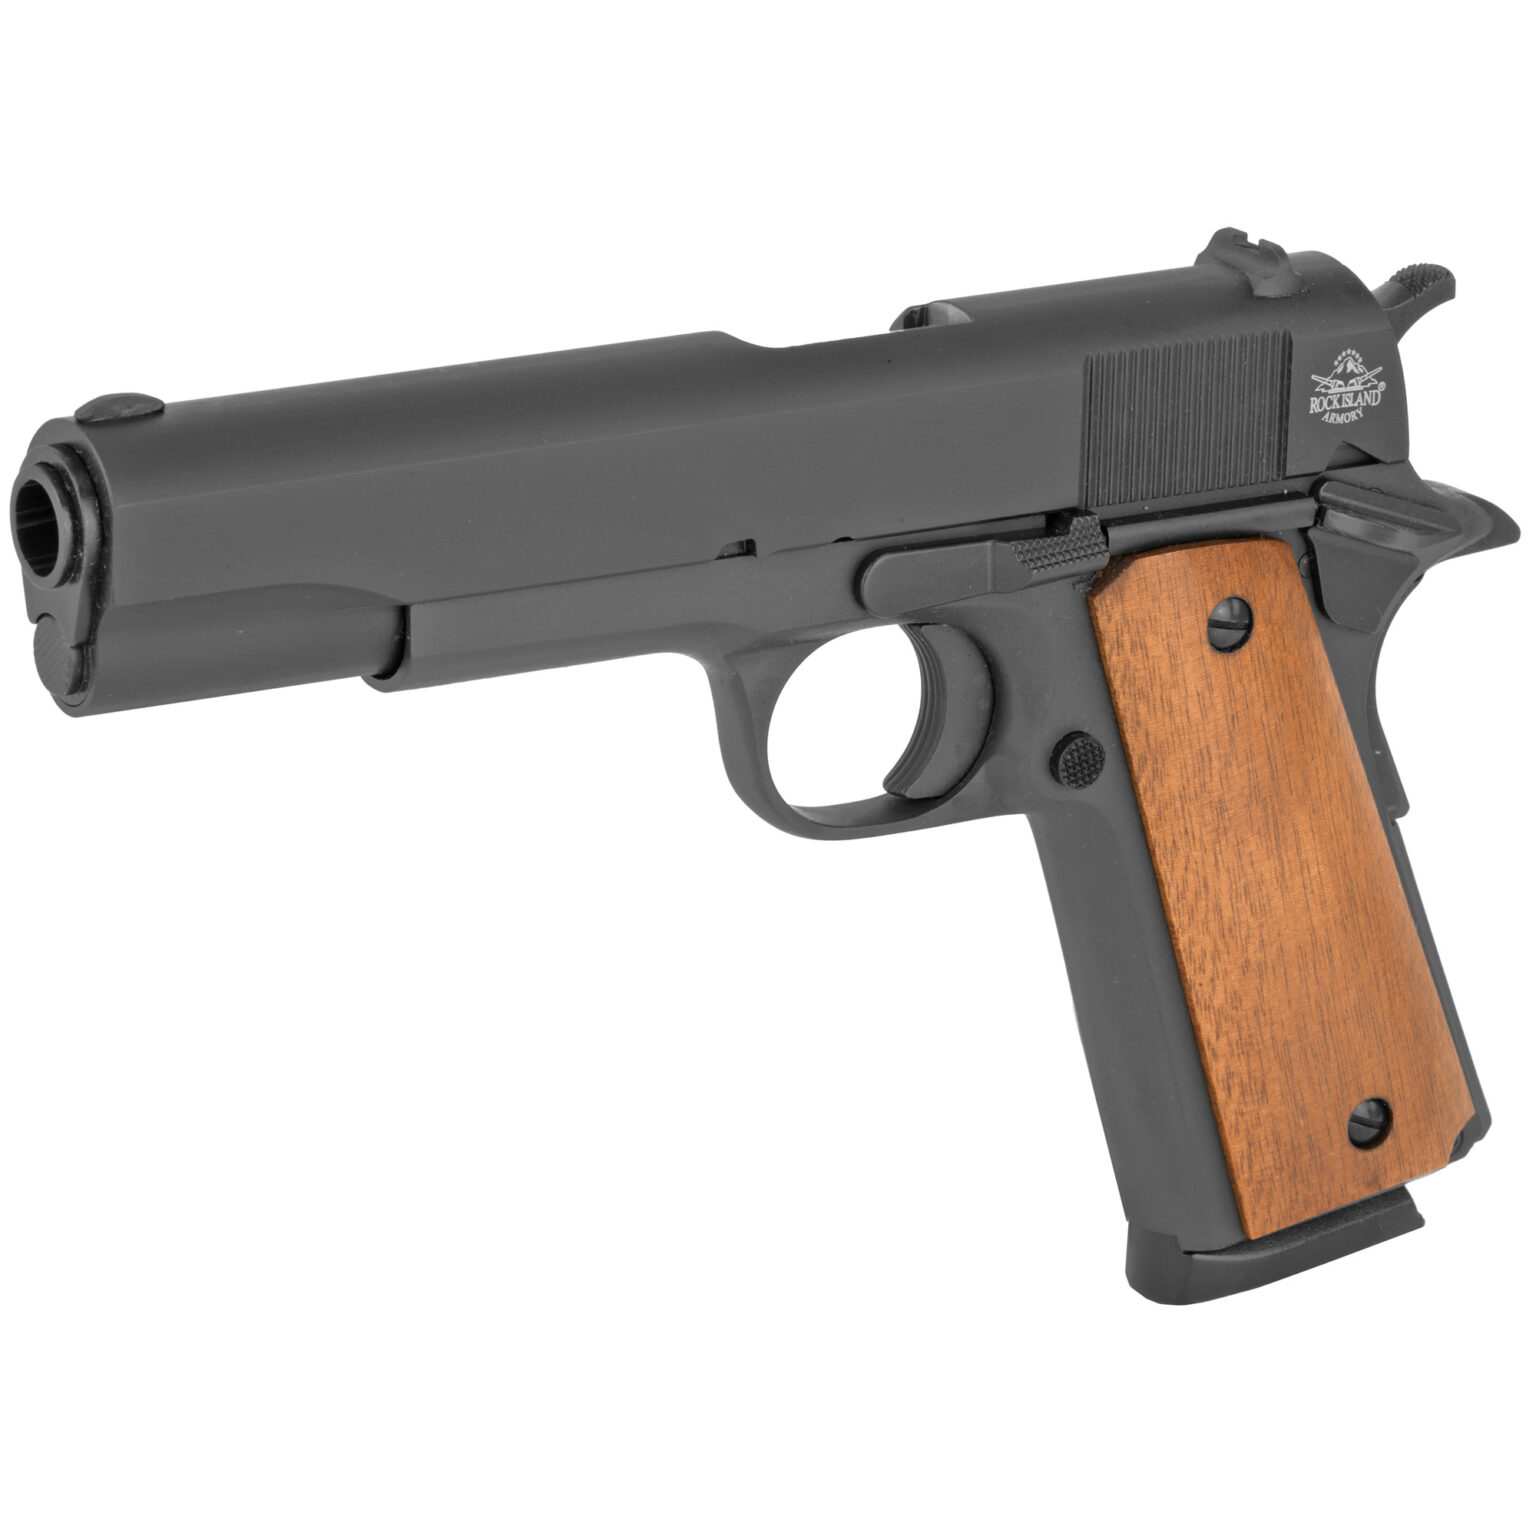 Armscor Rock Island Armory M1911 A1 Gi 1911 45acp Pistol Black Parkerized Finish Wood Grips 0501